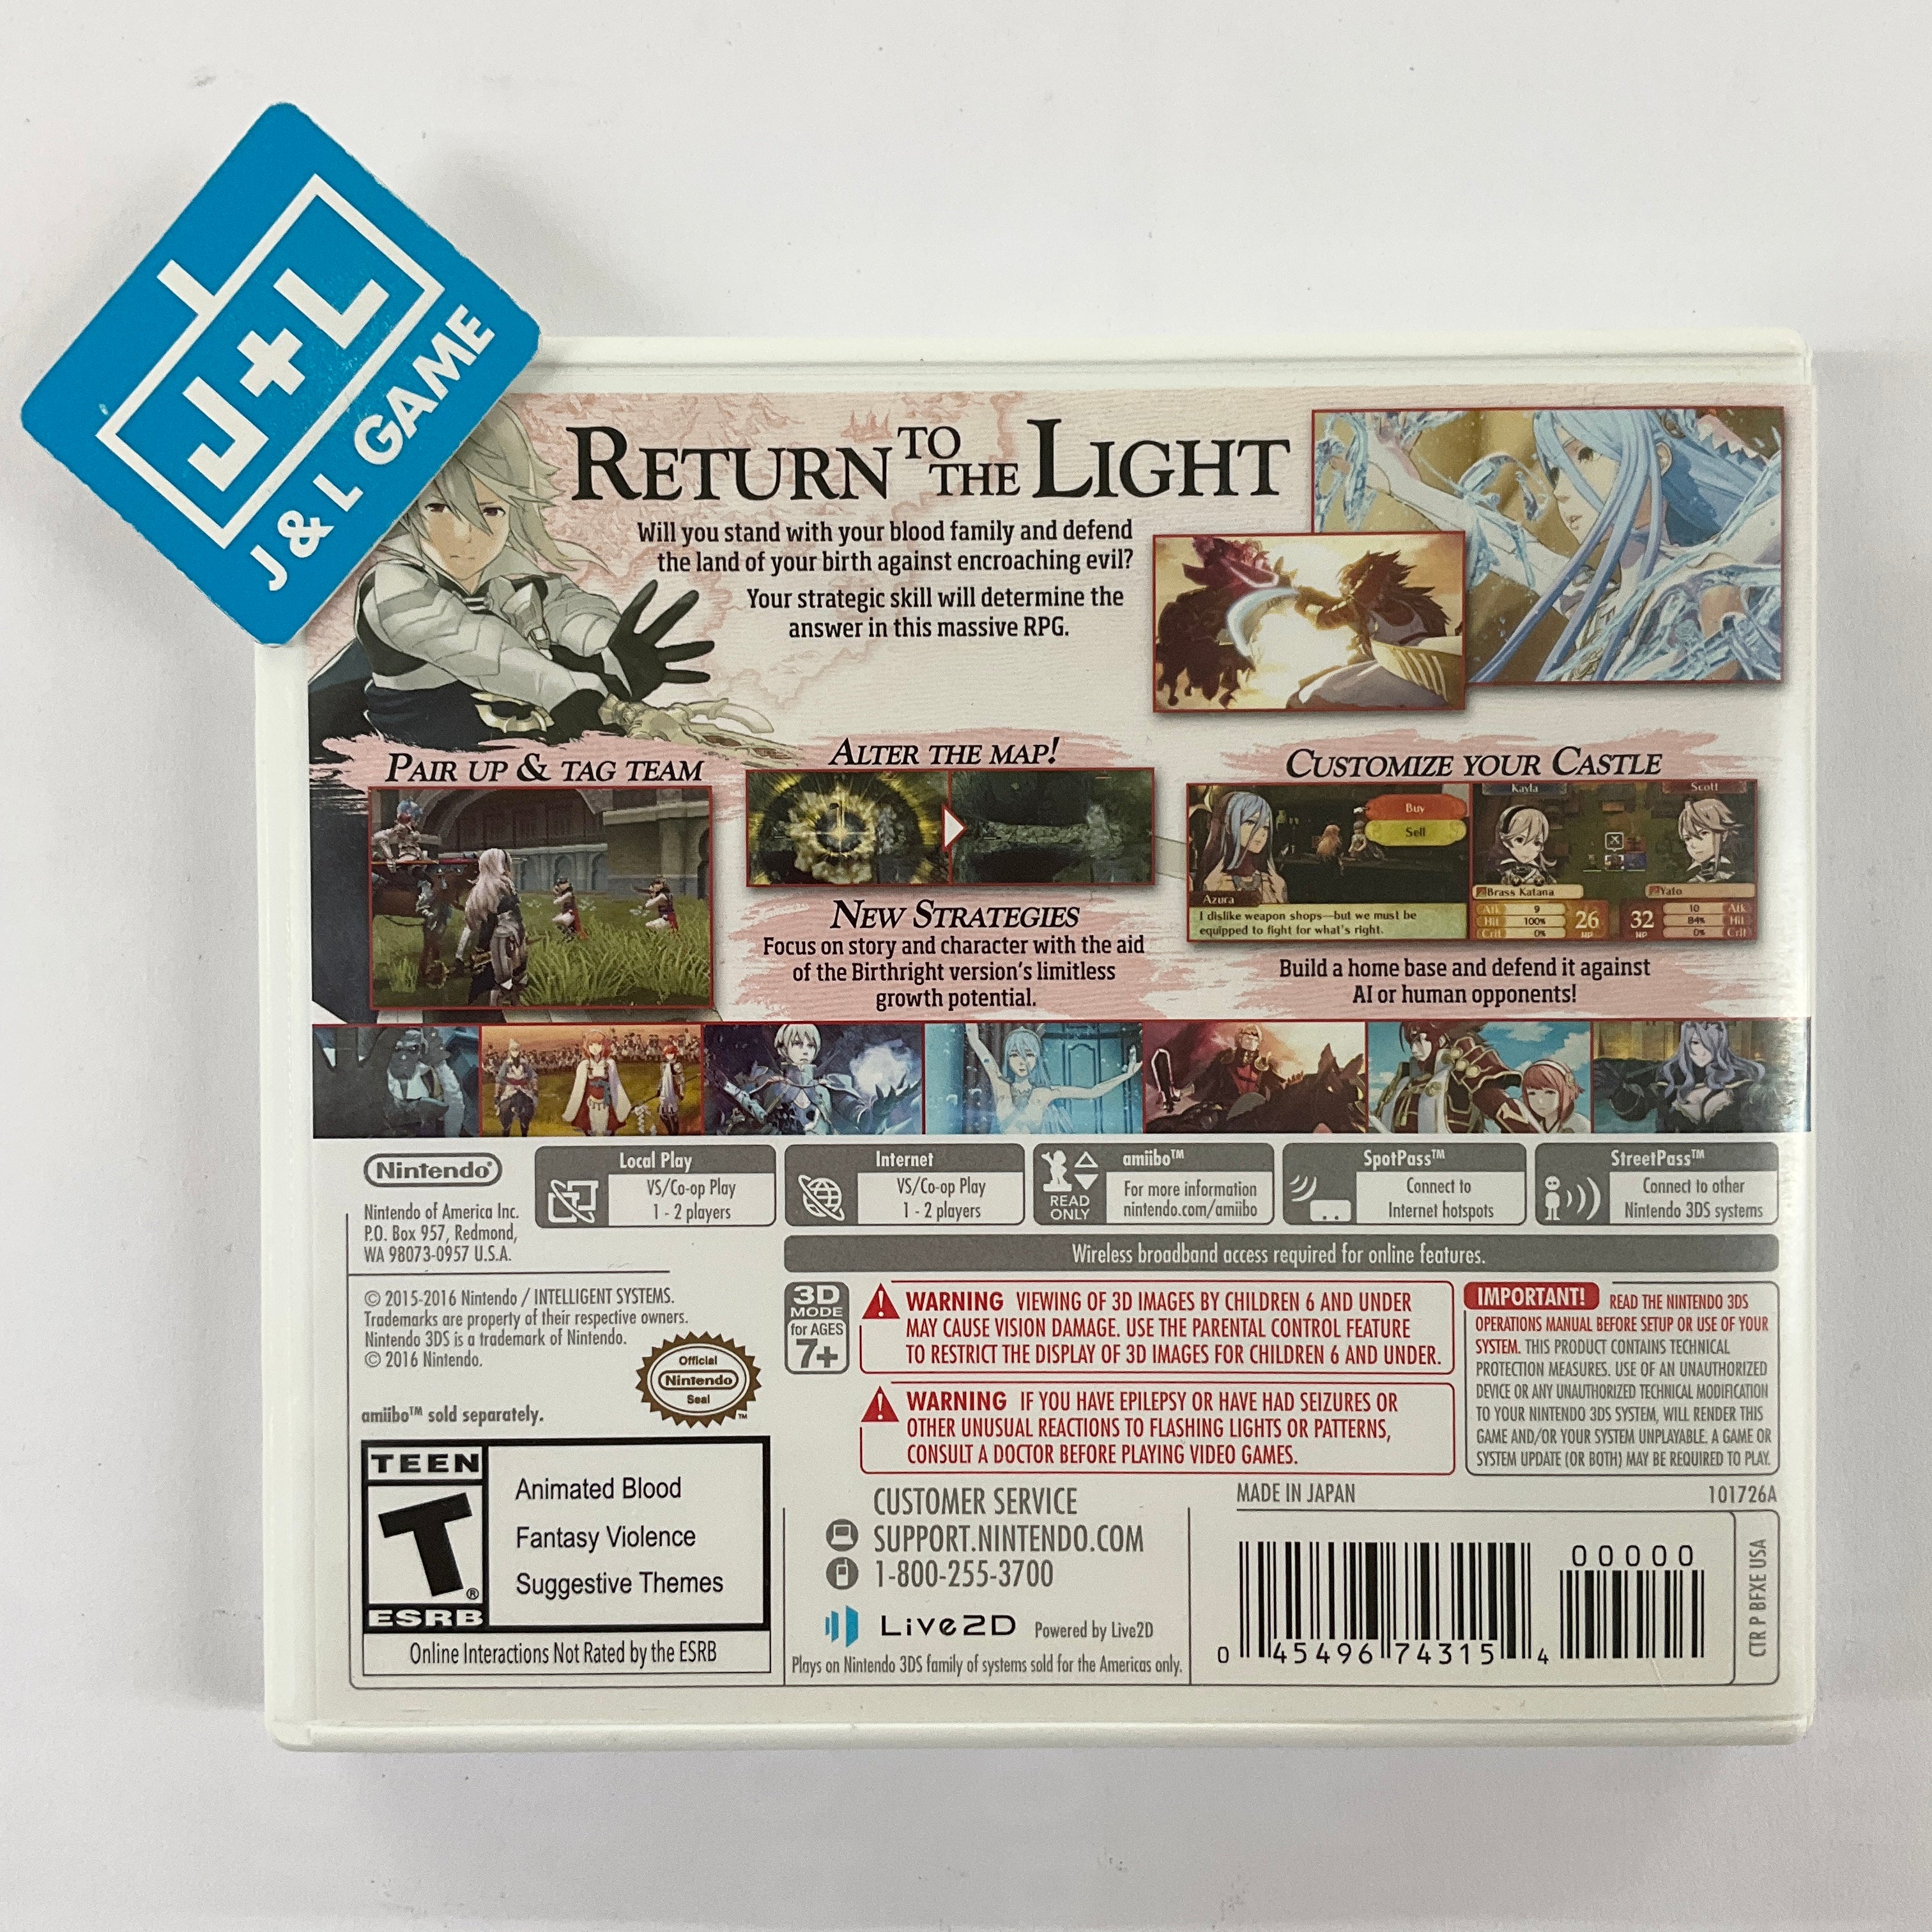 Fire Emblem Fates: Birthright - Nintendo 3DS [Pre-Owned] Video Games Nintendo   